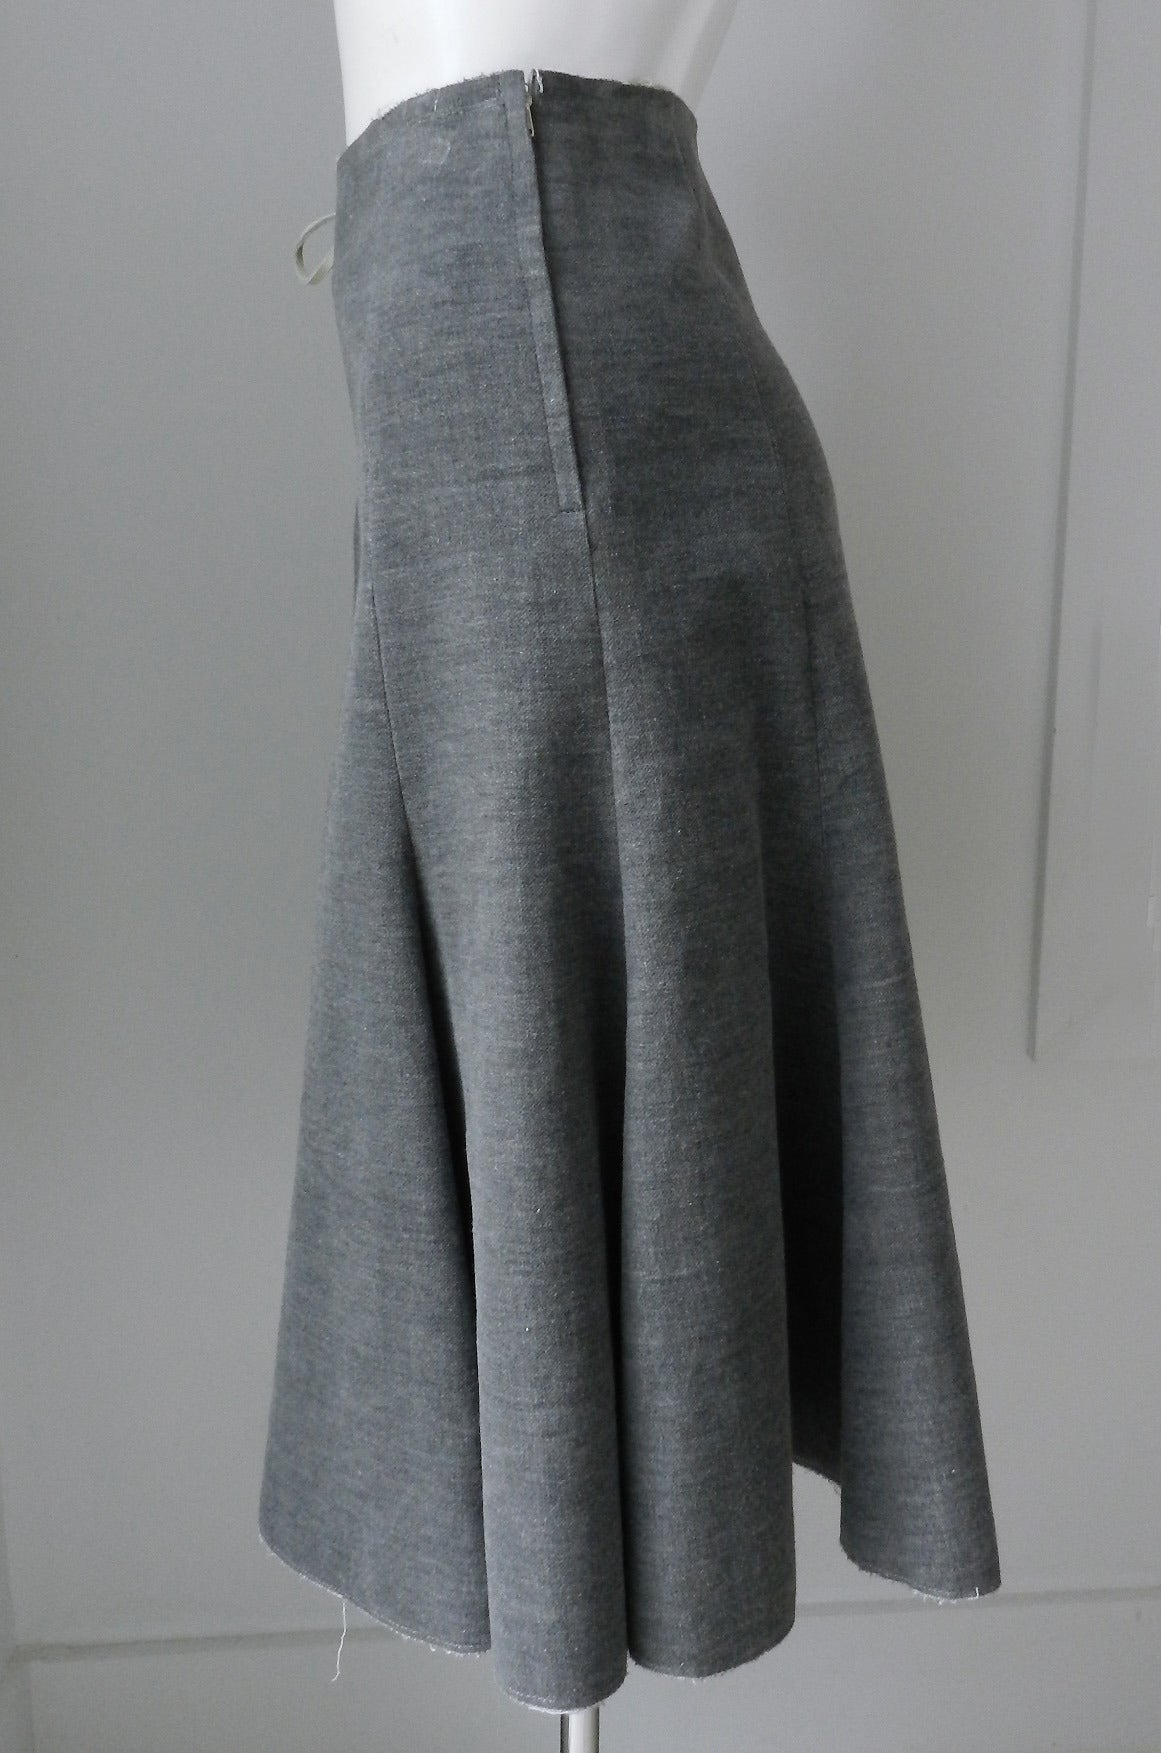 Vintage Comme des Garcons vintage grey velvet skirt. Front has white leather lace-up design. Hidden side zipper. Tagged size M. Garment measures 30